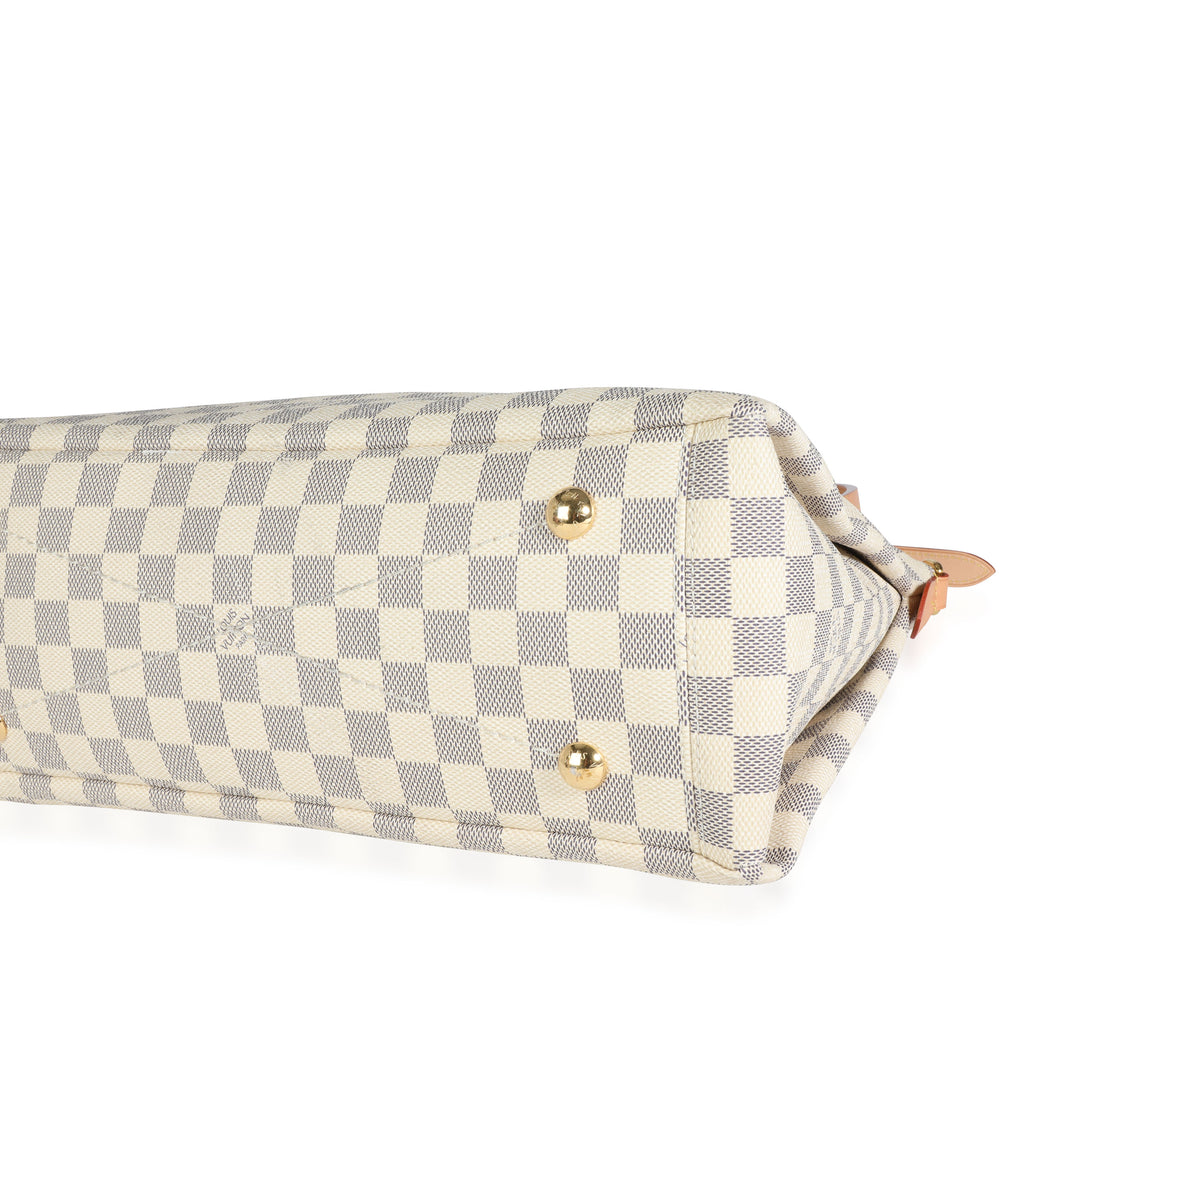 Louis Vuitton - Authenticated Lymington Handbag - Cloth White Plain for Women, Very Good Condition